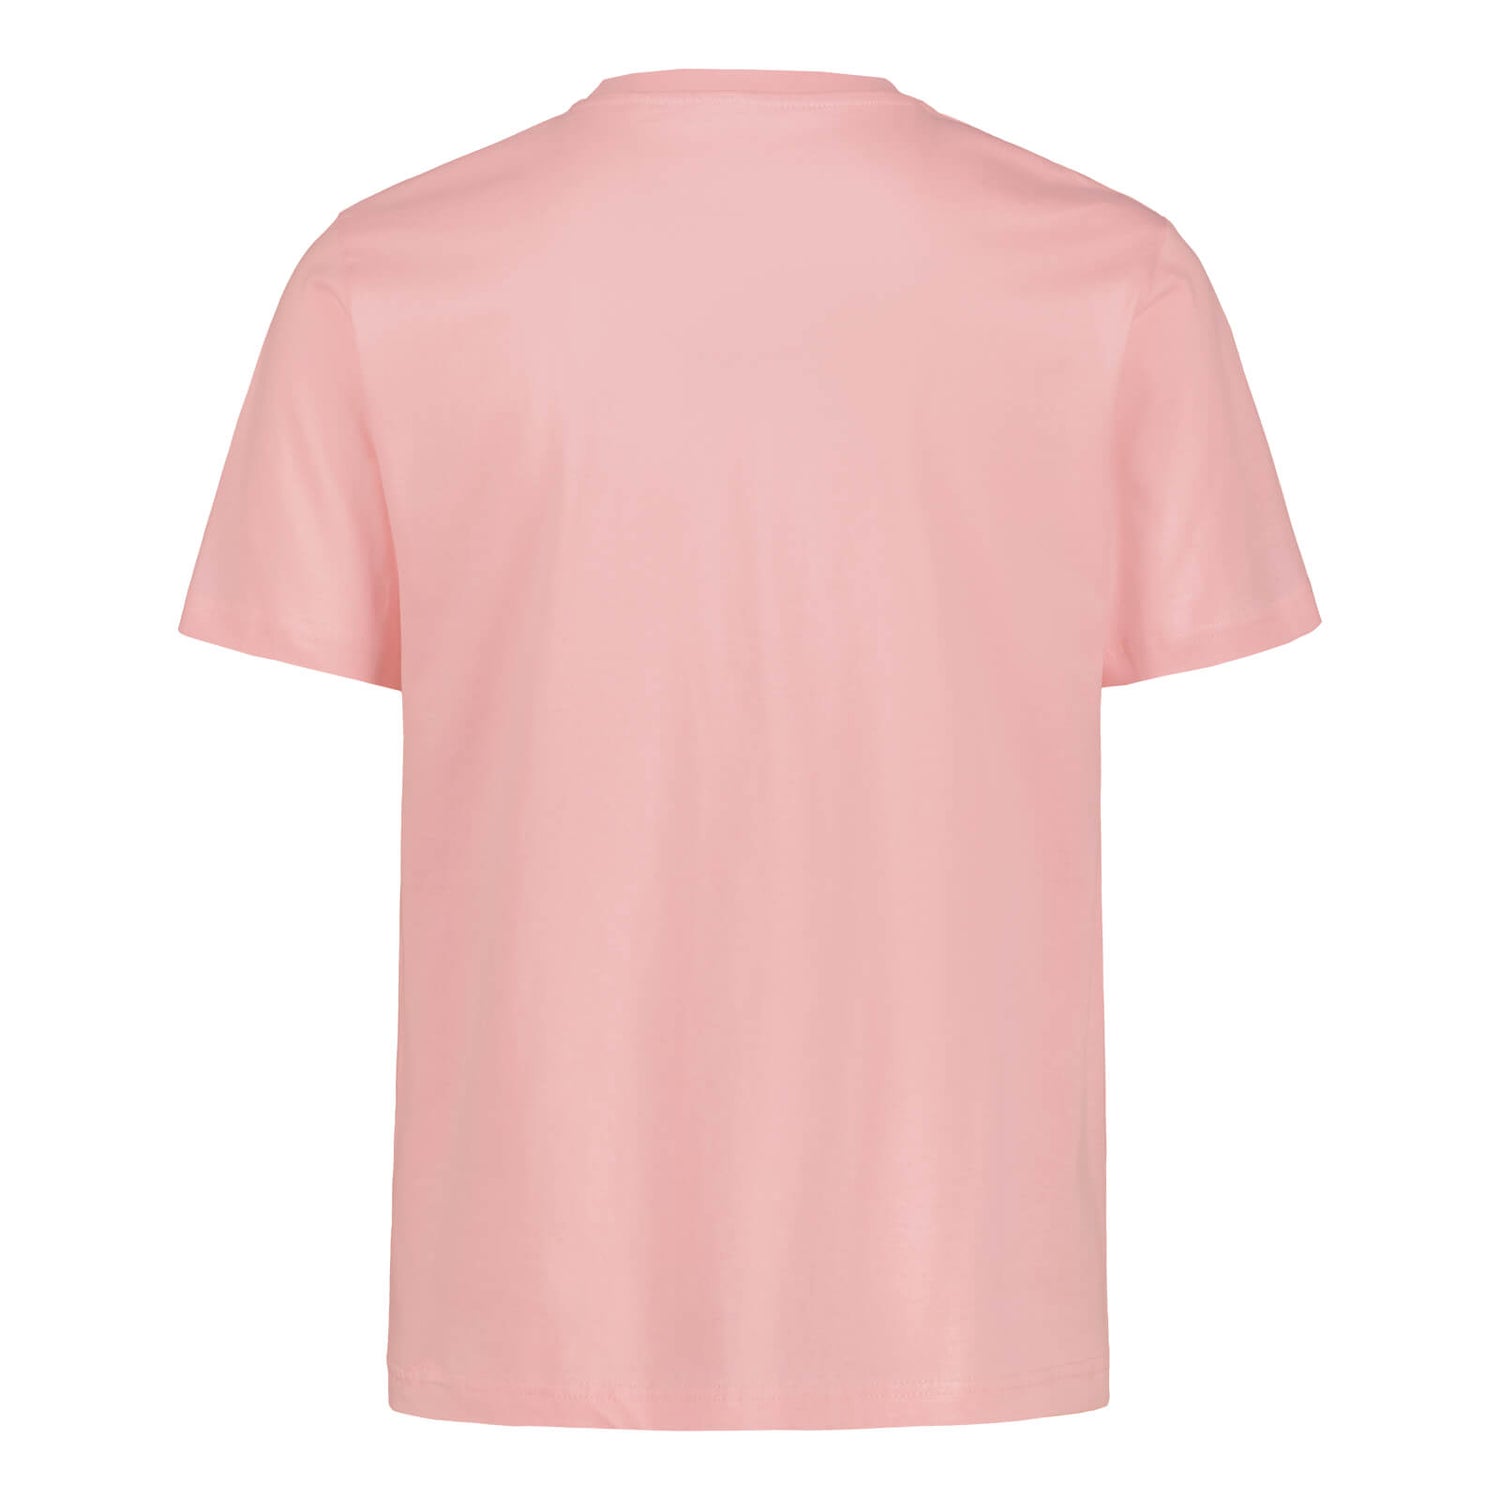 GOAT Pukki T-shirt, Pink